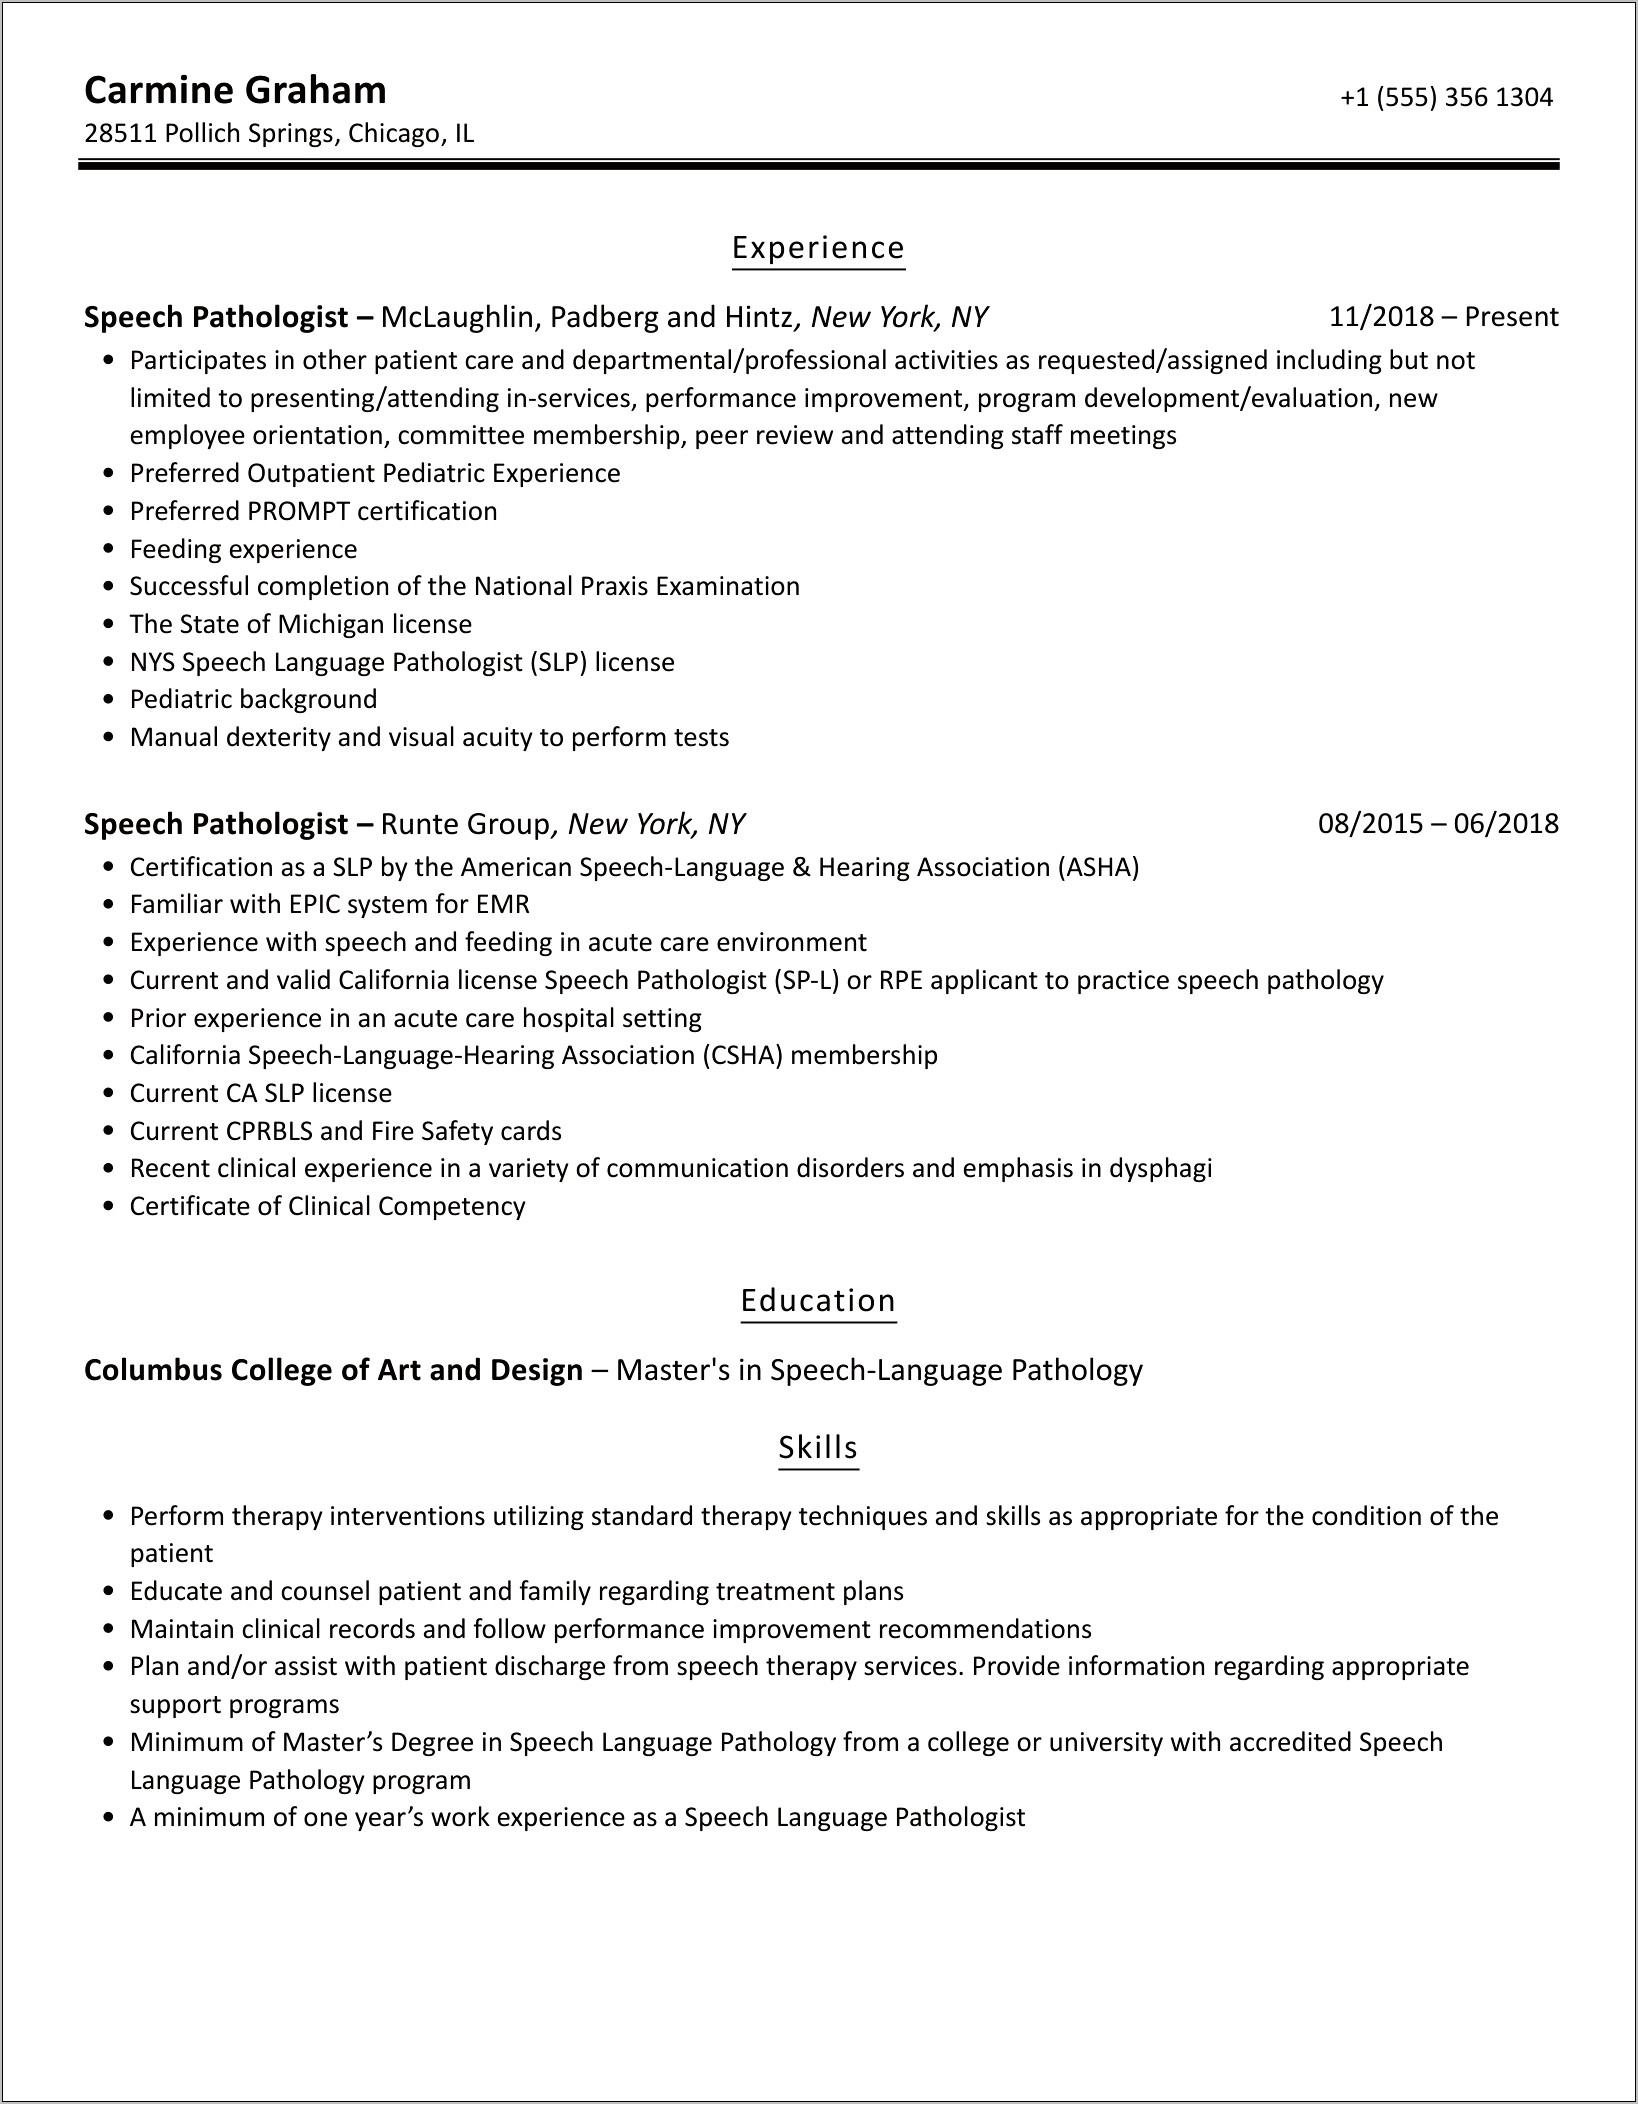 Sample Resume For Speech Pathologists